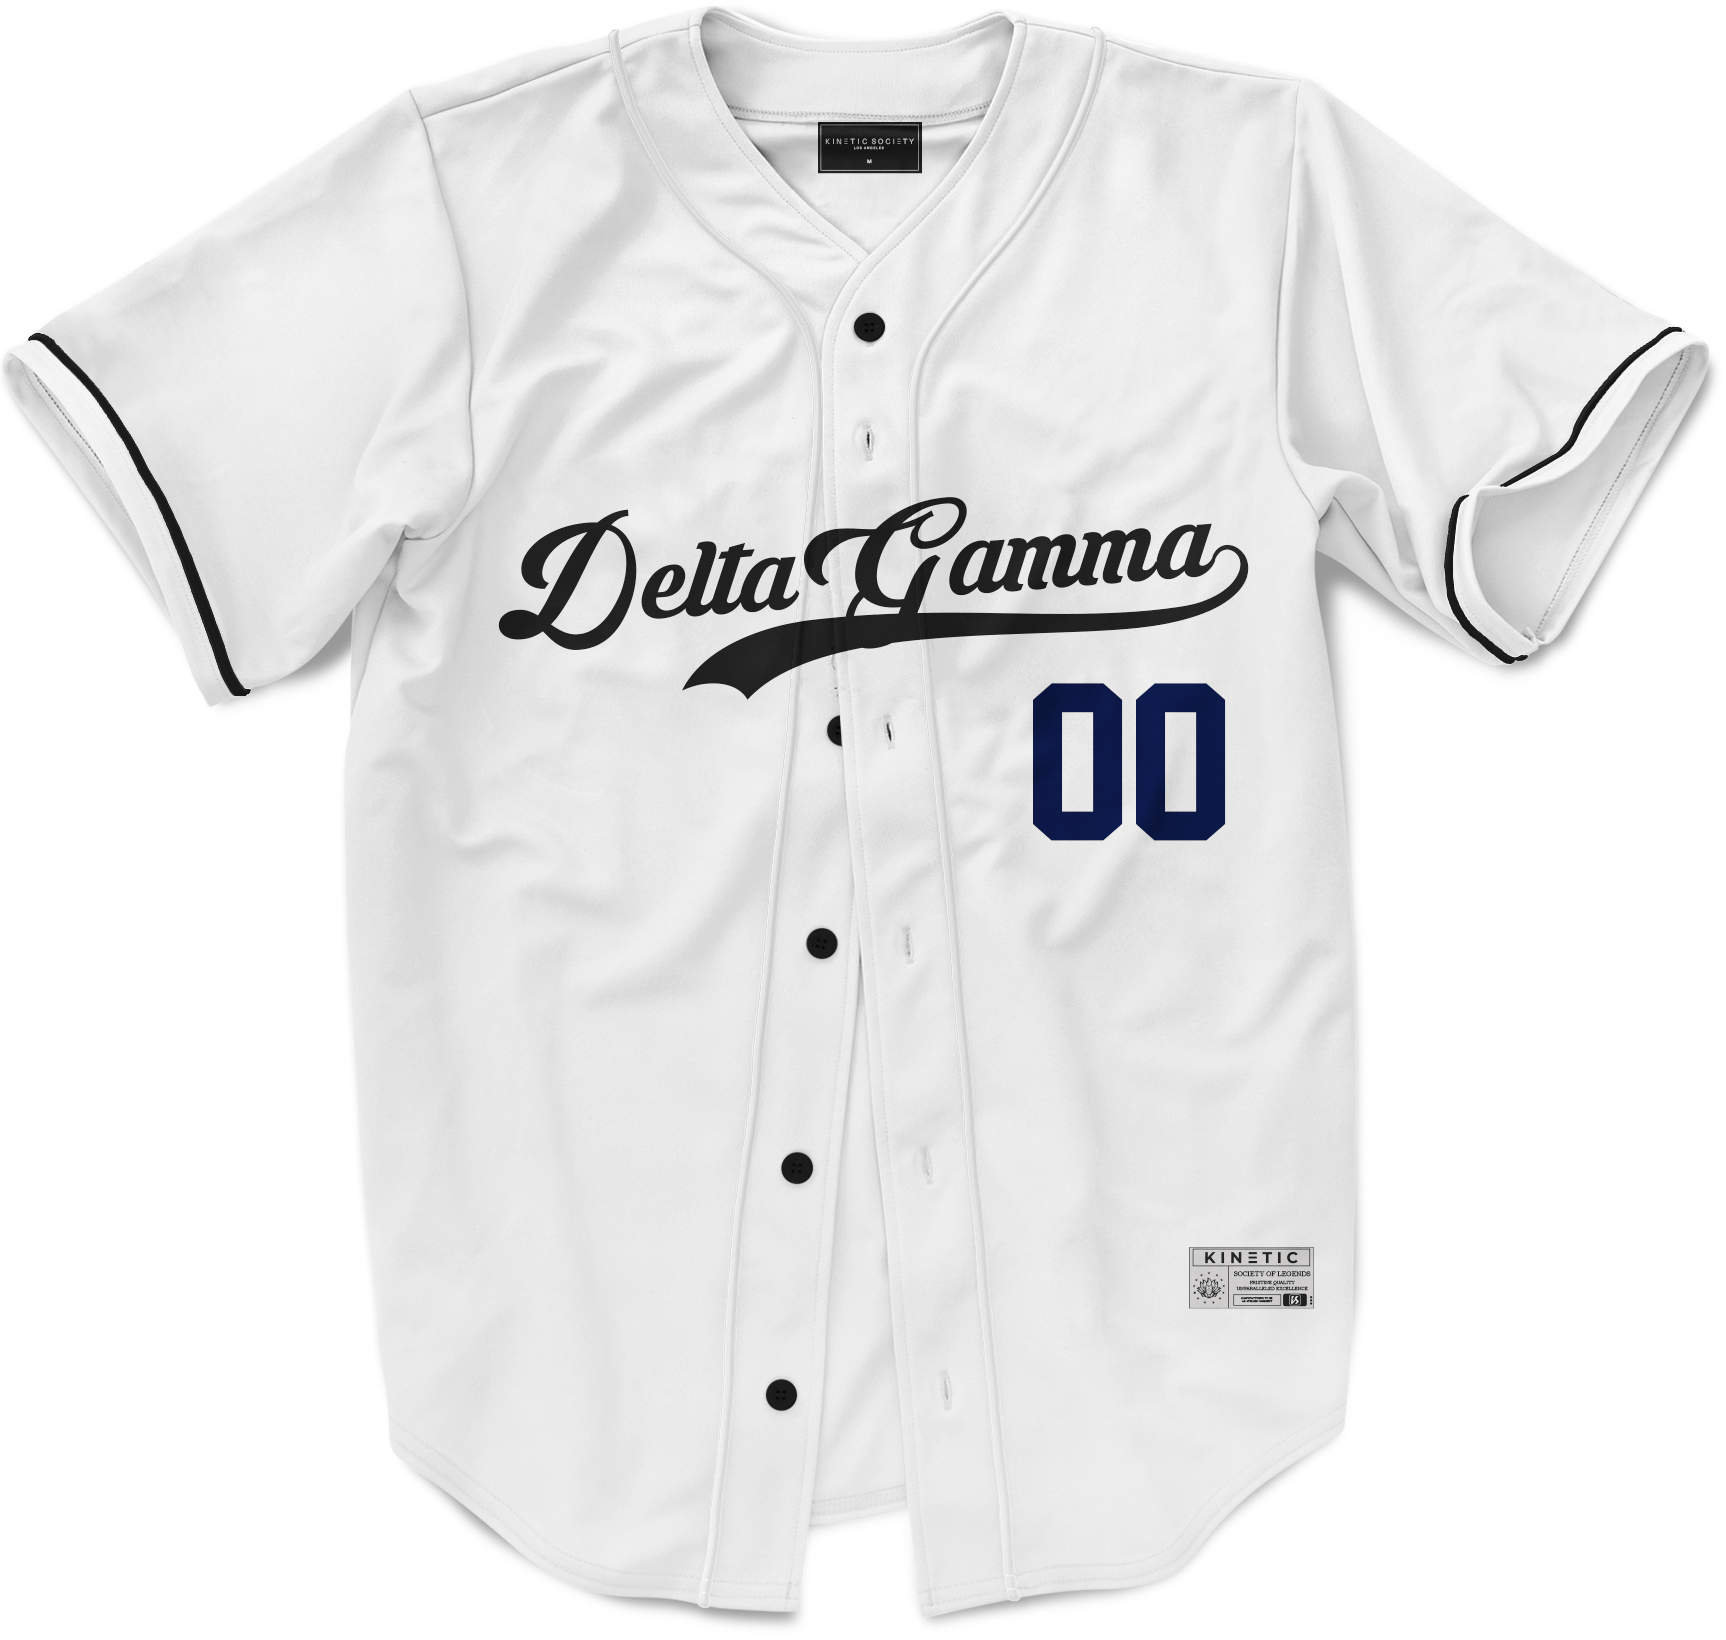 Delta Gamma - Classic Ballpark Blue Baseball Jersey